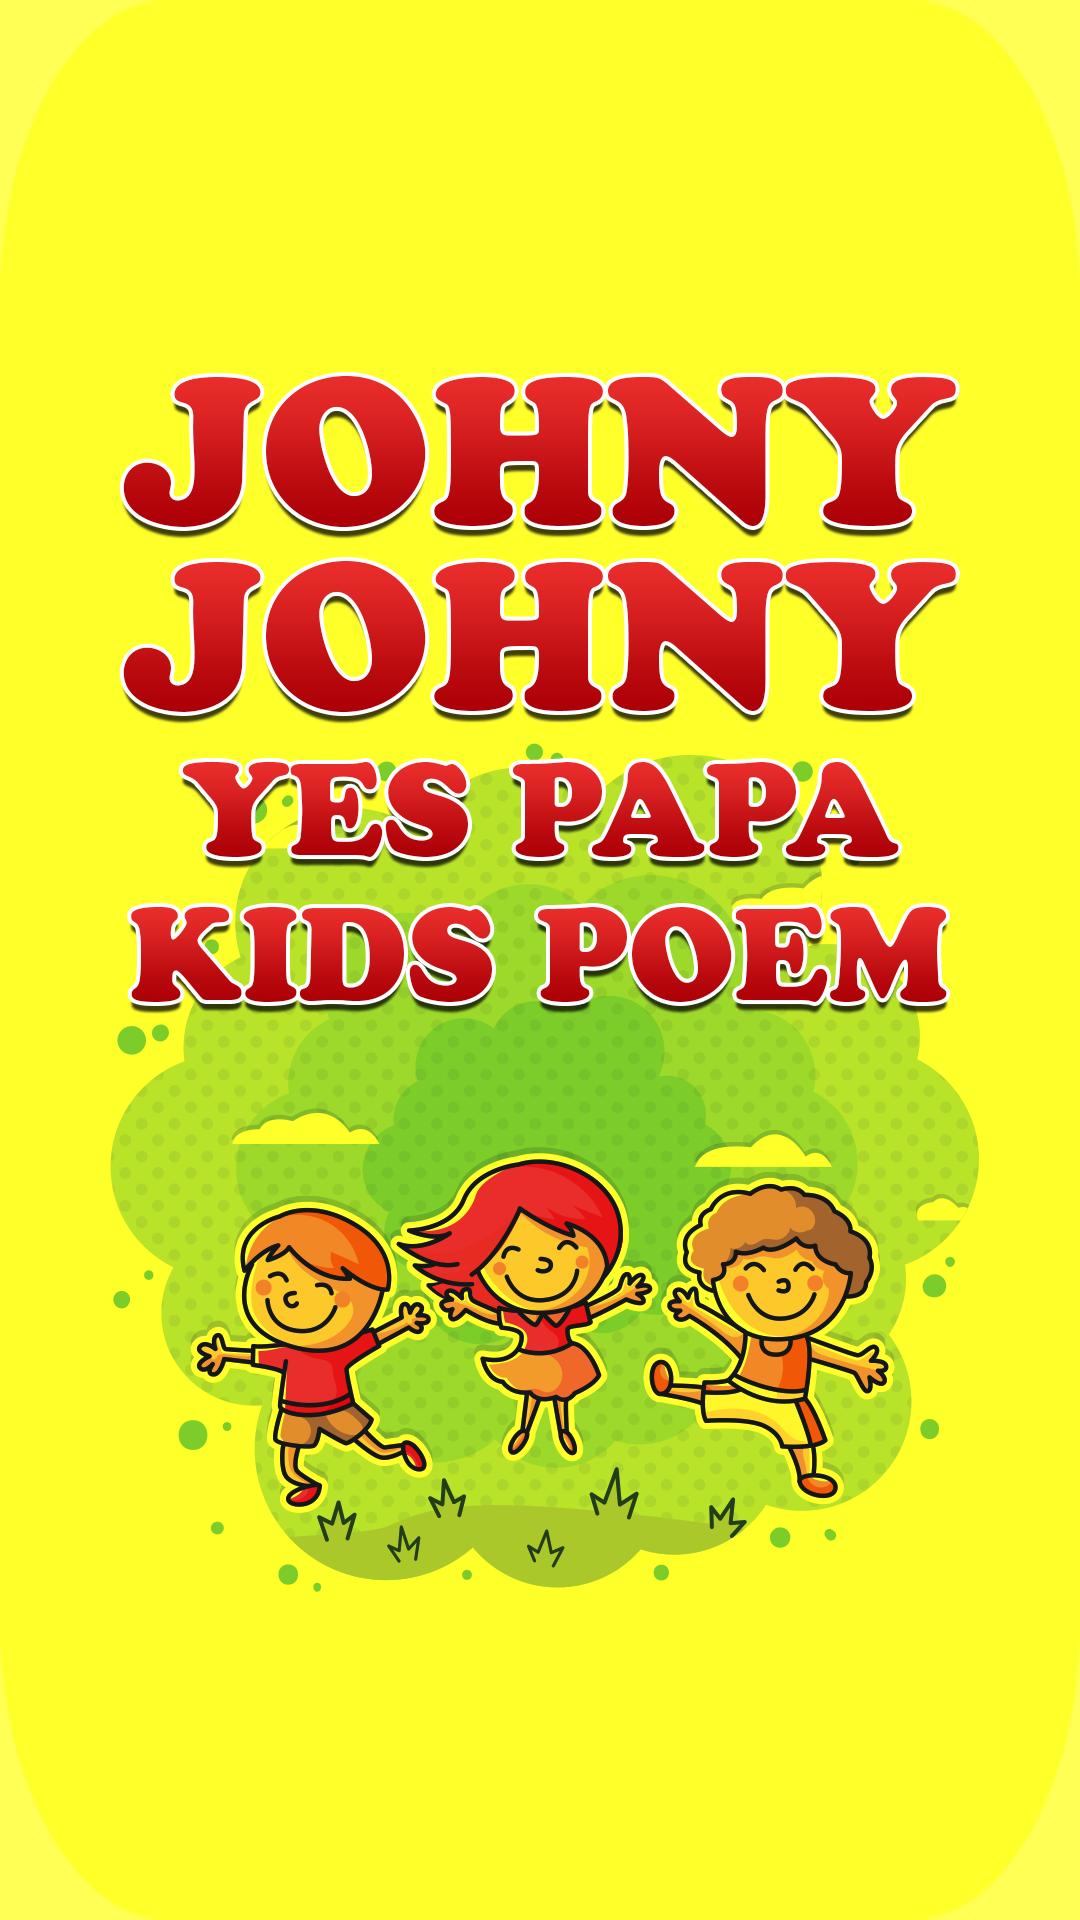 Johny Johny Yes Papa For Android Apk Download